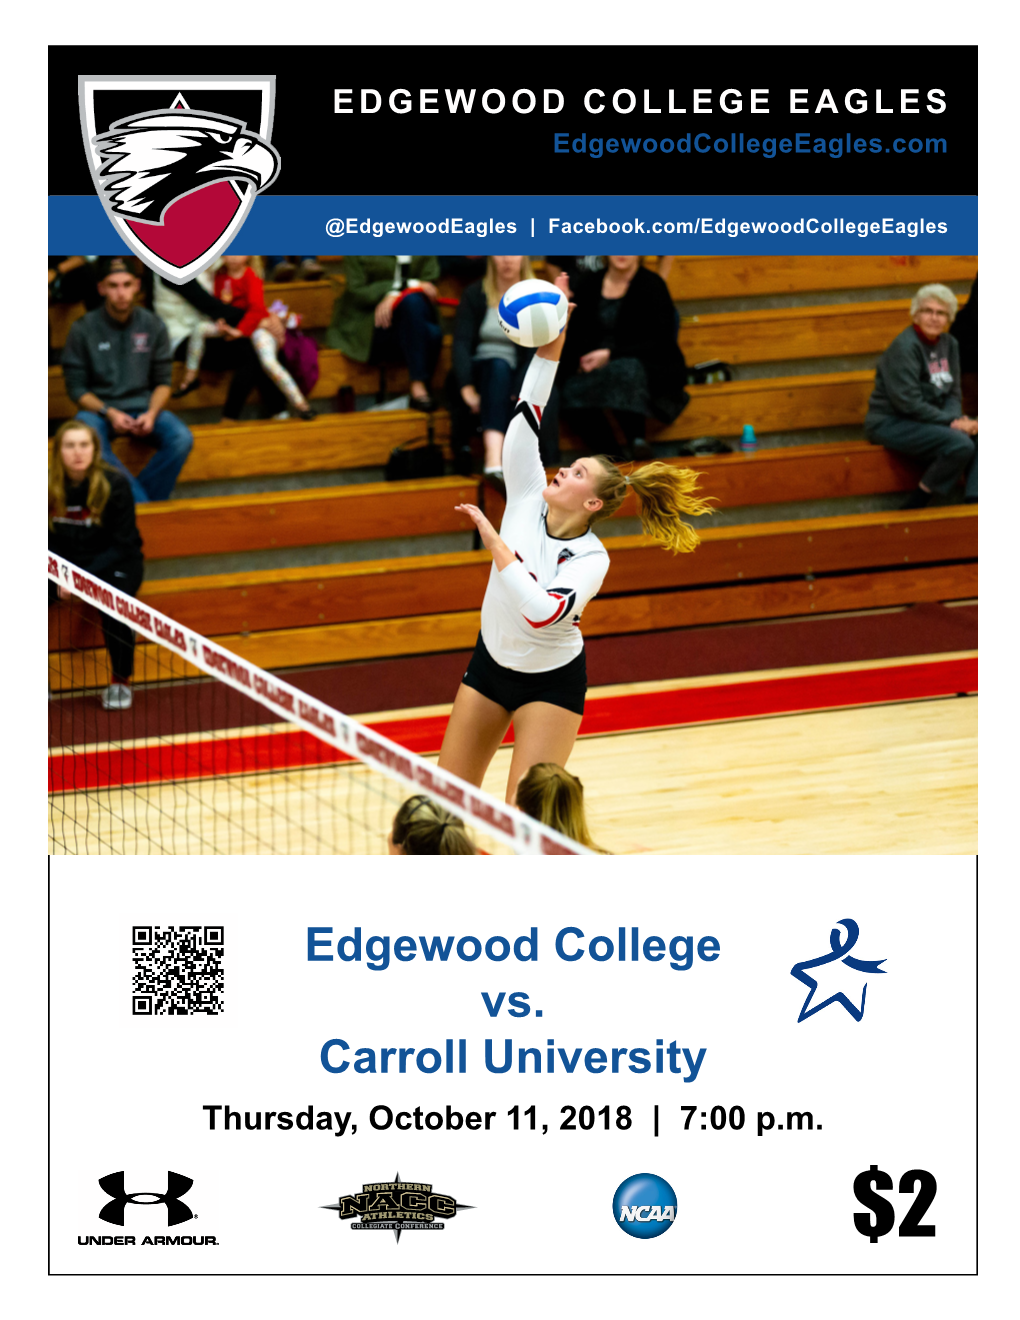 Edgewood College Vs. Carroll University Thursday, October 11, 2018 | 7:00 P.M